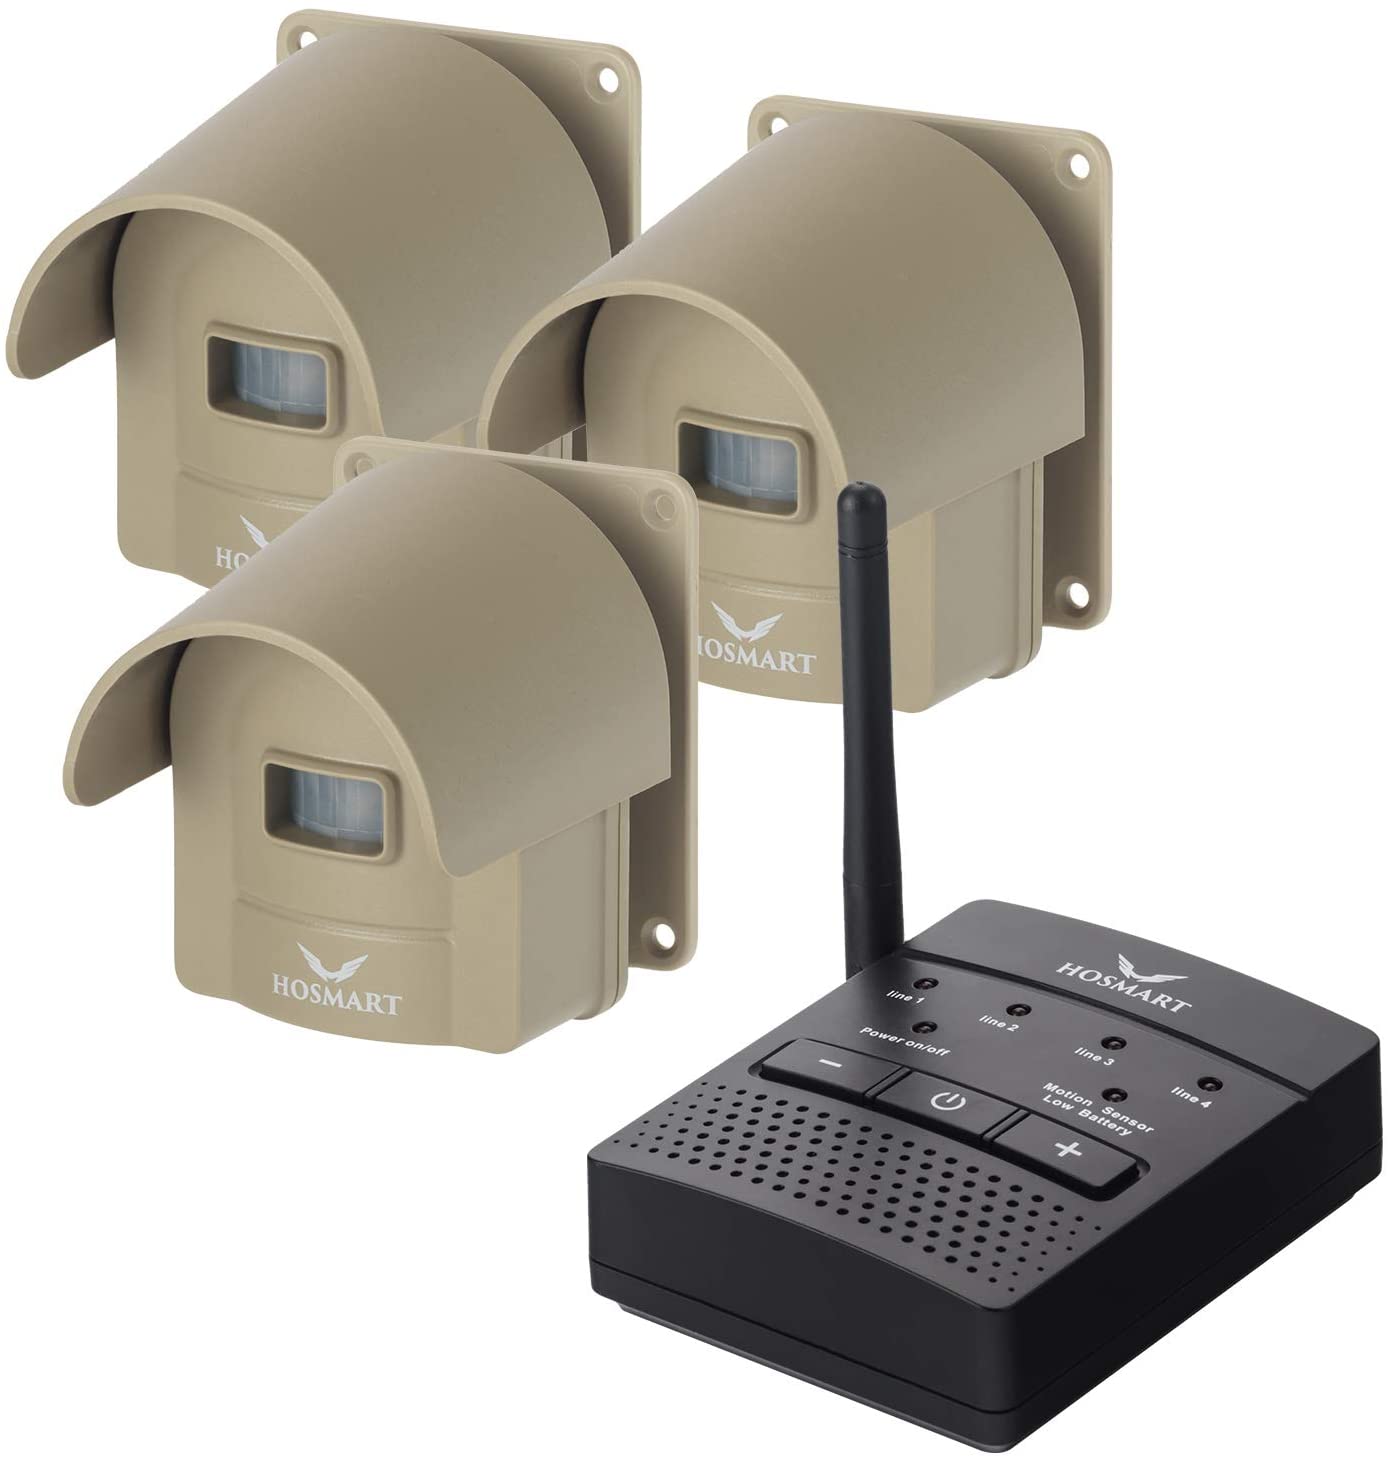 Hosmart 1/4 Mile Long Range Rechargable Wireless Driveway Alarm Alert System (1 Receiver and 3 Sensors)